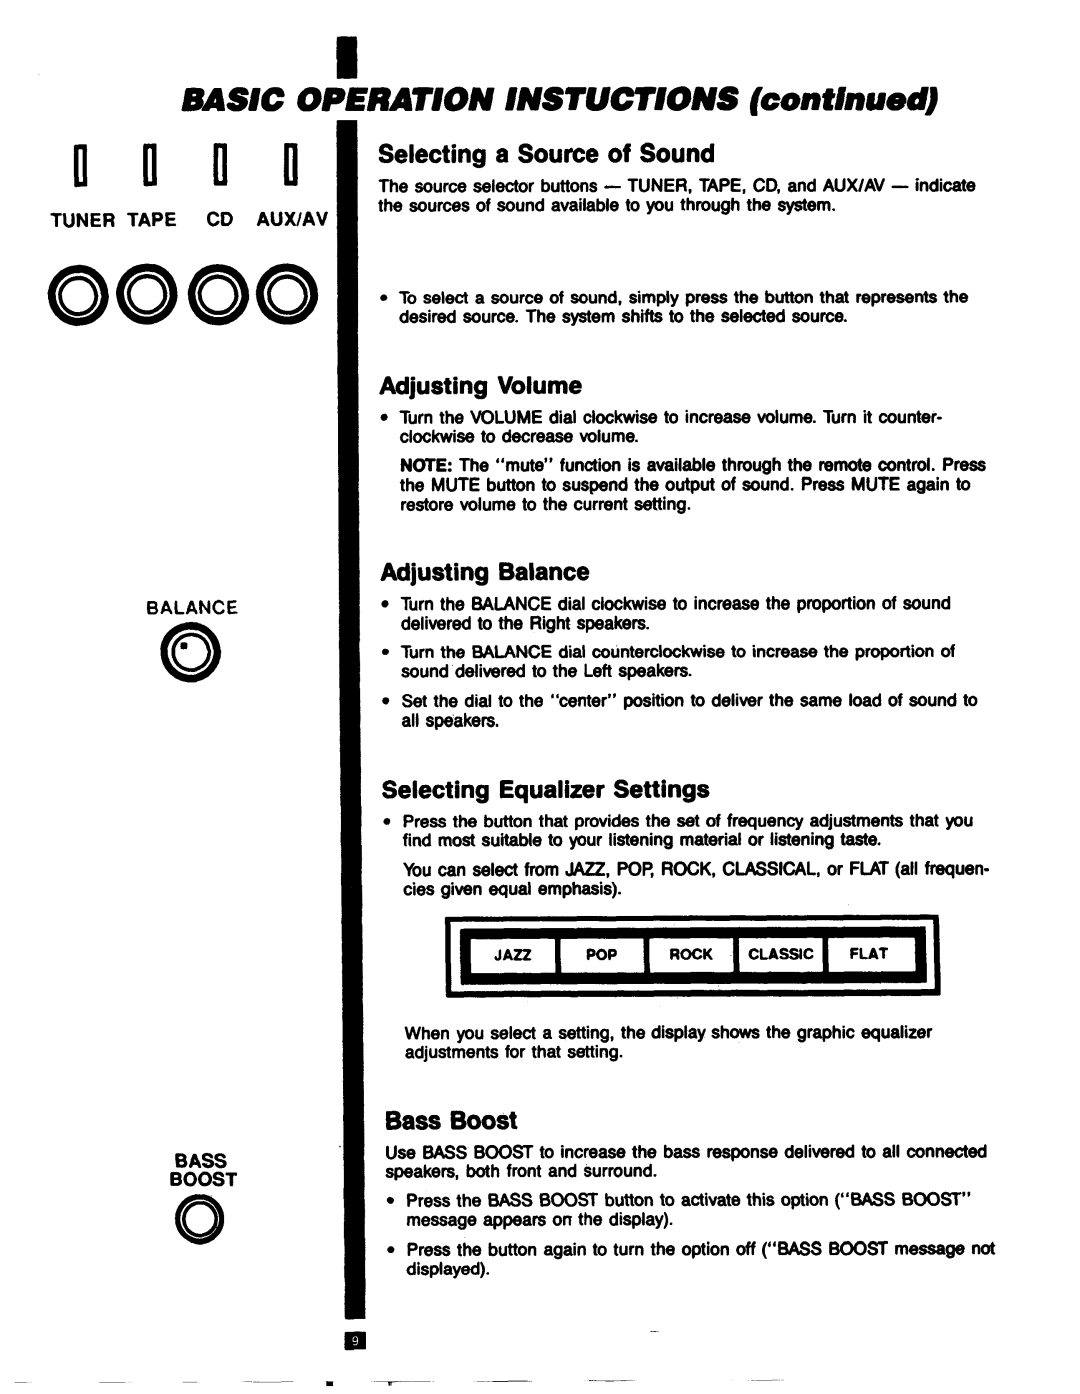 RCA RP-9753 manual BASIC OPERATION INSTUCTJONS conflnued, Selecting a Source of Sound, Adjusting Volume, Adjusting Balance 